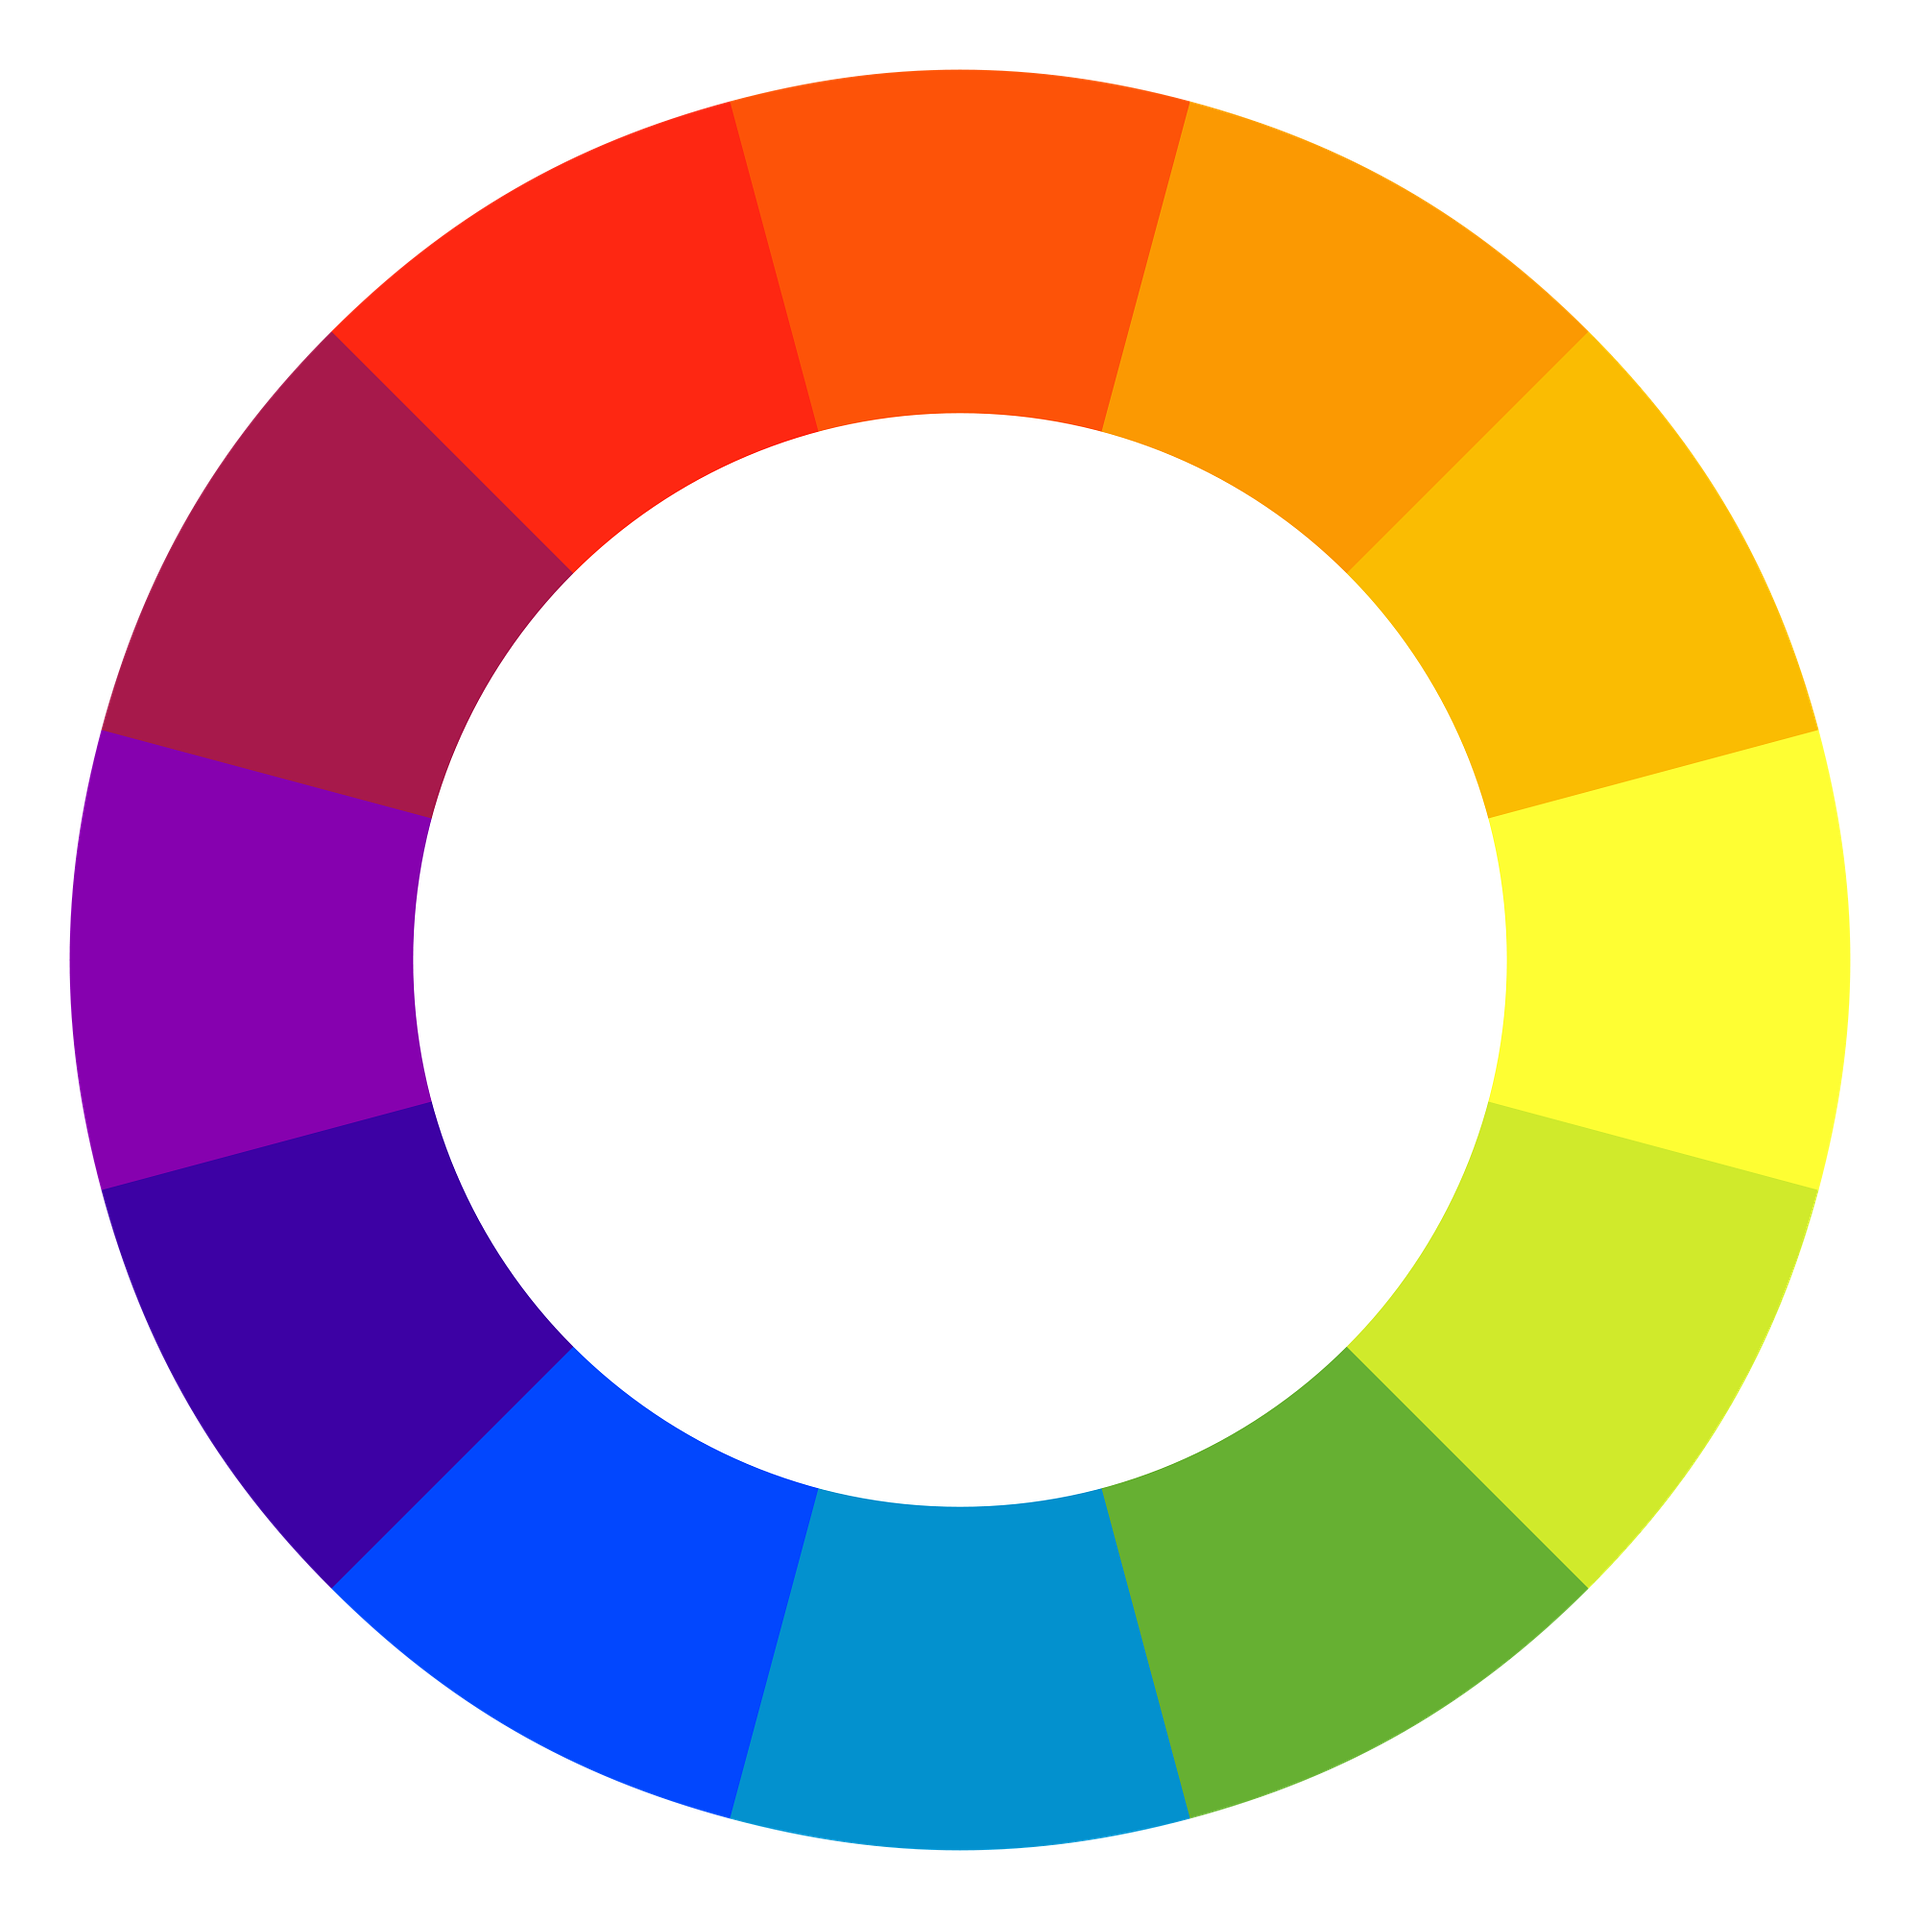 color-spectrum-1192509_1920